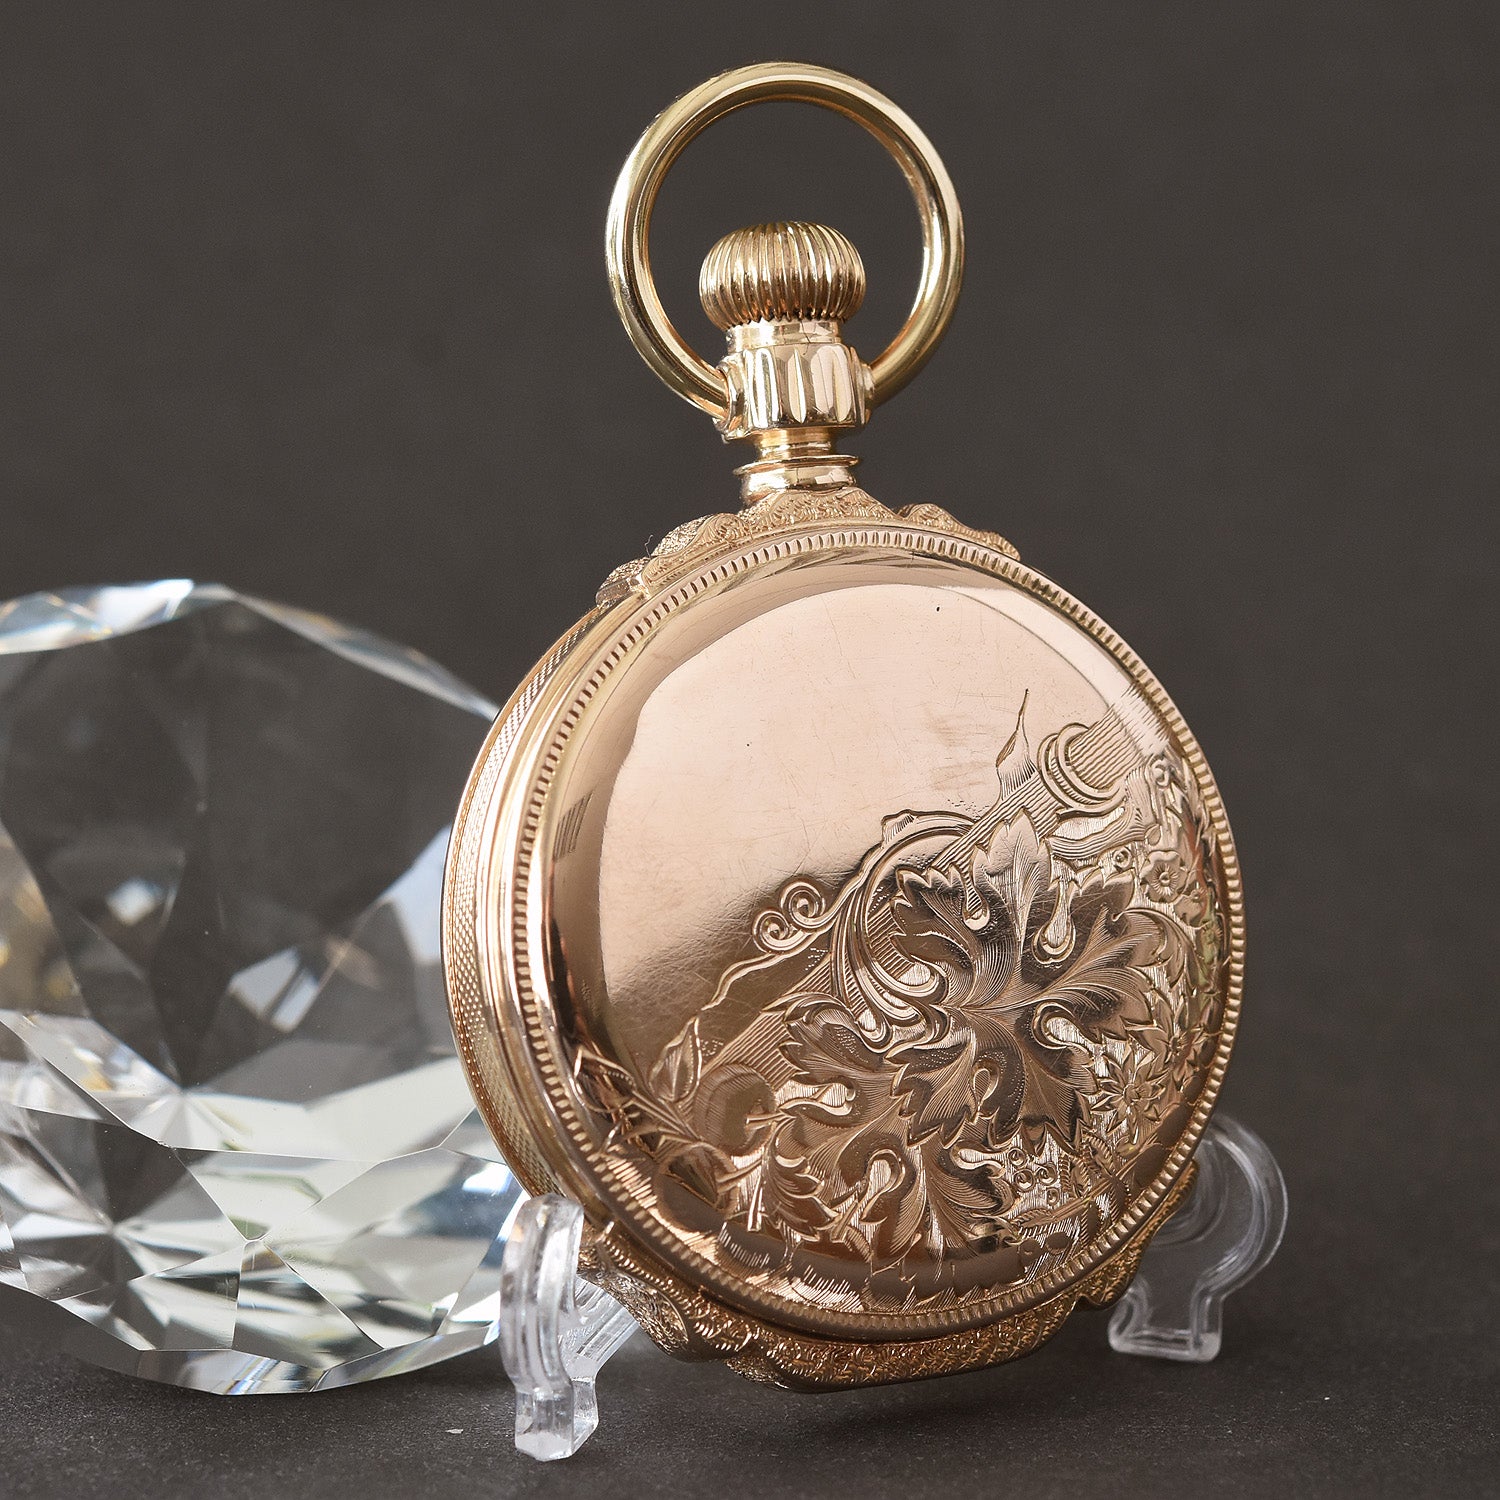 1882 Am. WALTHAM Hillside 14K Gold Hunter 14s Pocket Watch